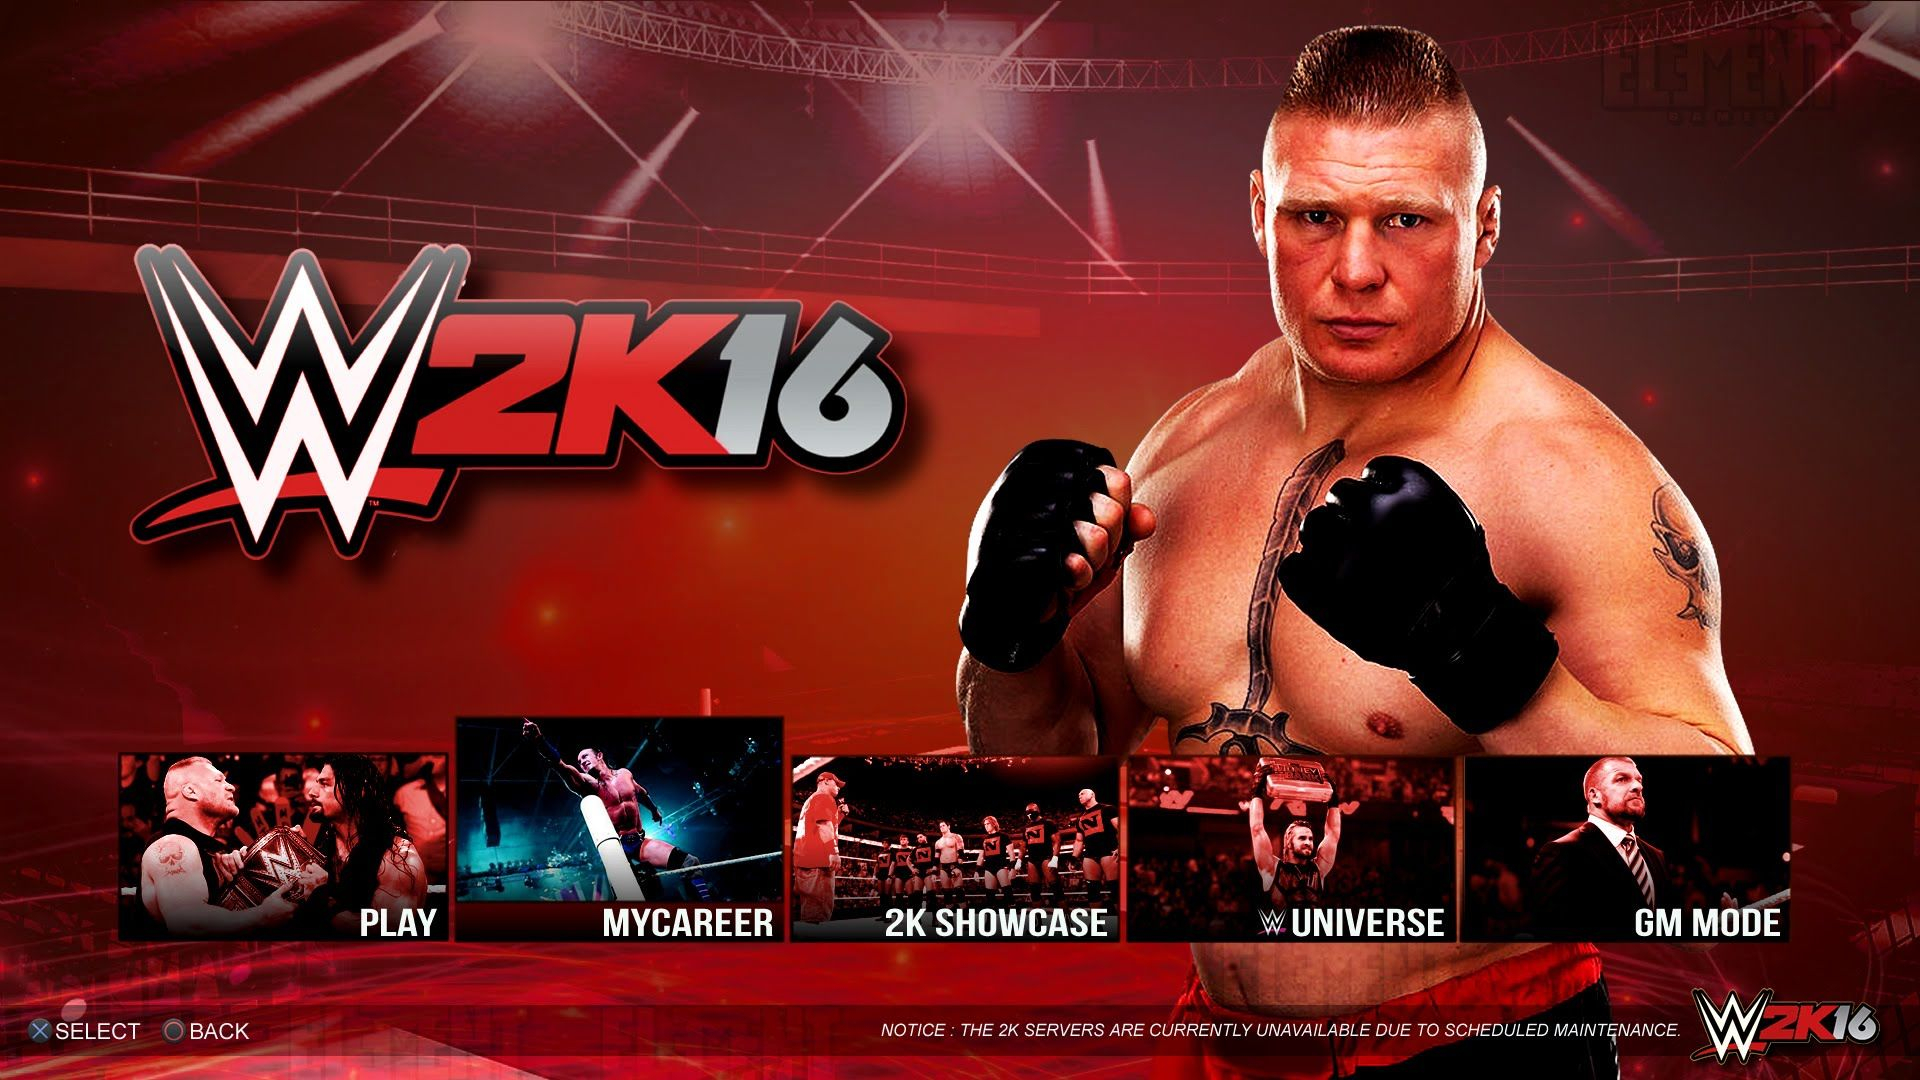 1920x1080 WWE 2K16 Demo Gameplay Menu Theme Options! PS4/XB1 Notion | Free pc games download, Wwe game download, Free pc games